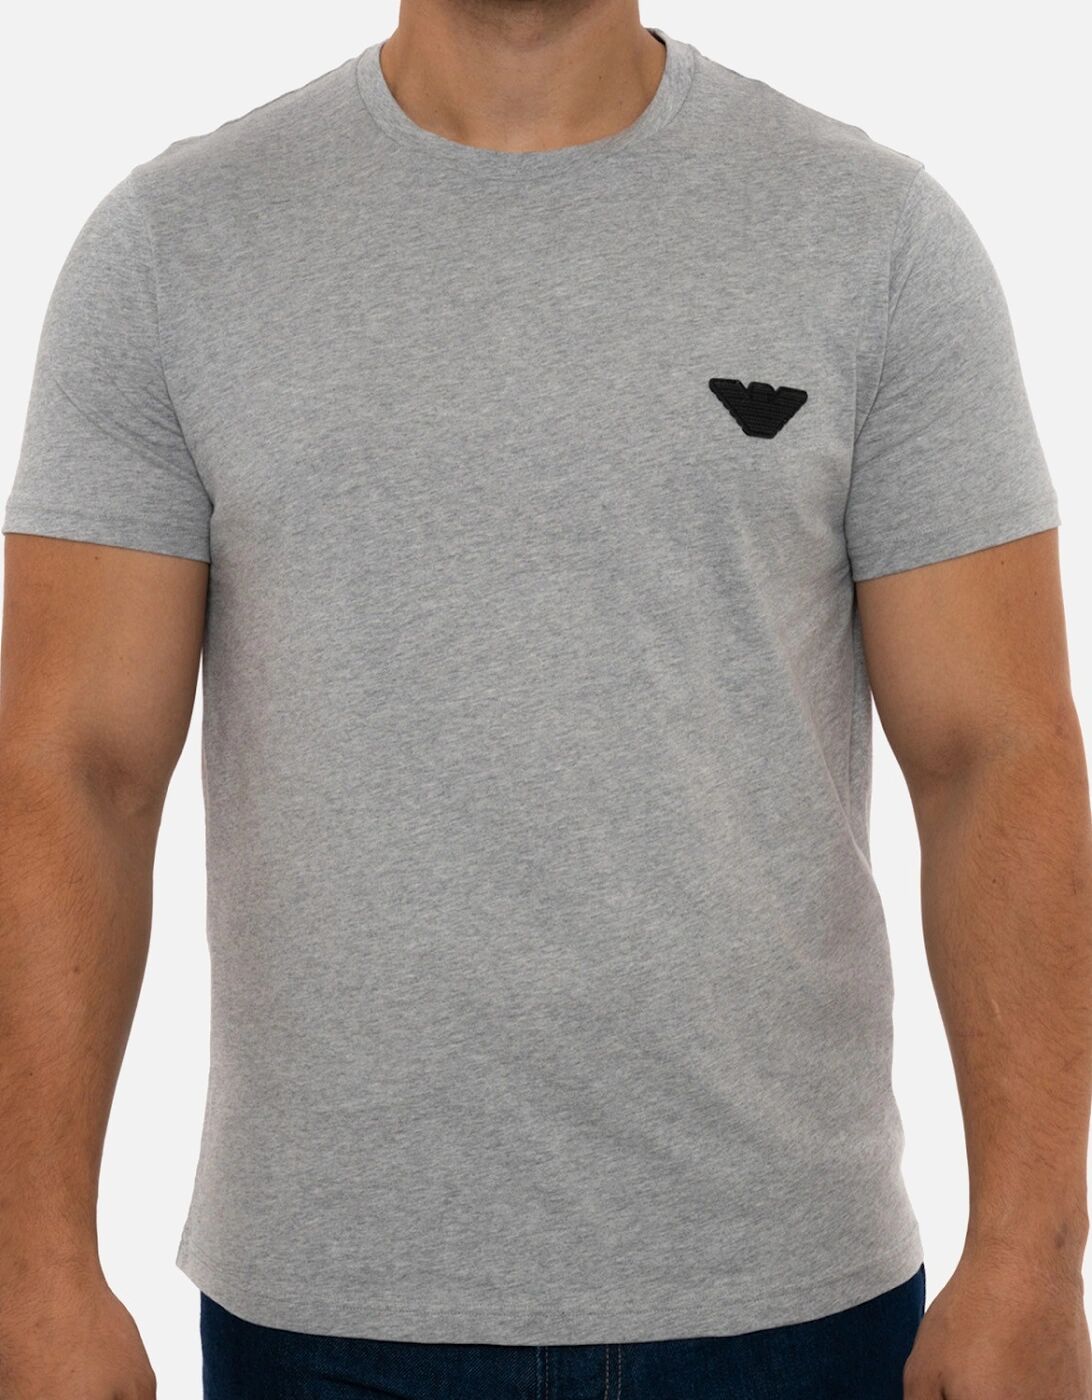 Men's Emporio Armani Underwear Mens Badge Logo T-Shirt (Grey) - Size: Regular/36